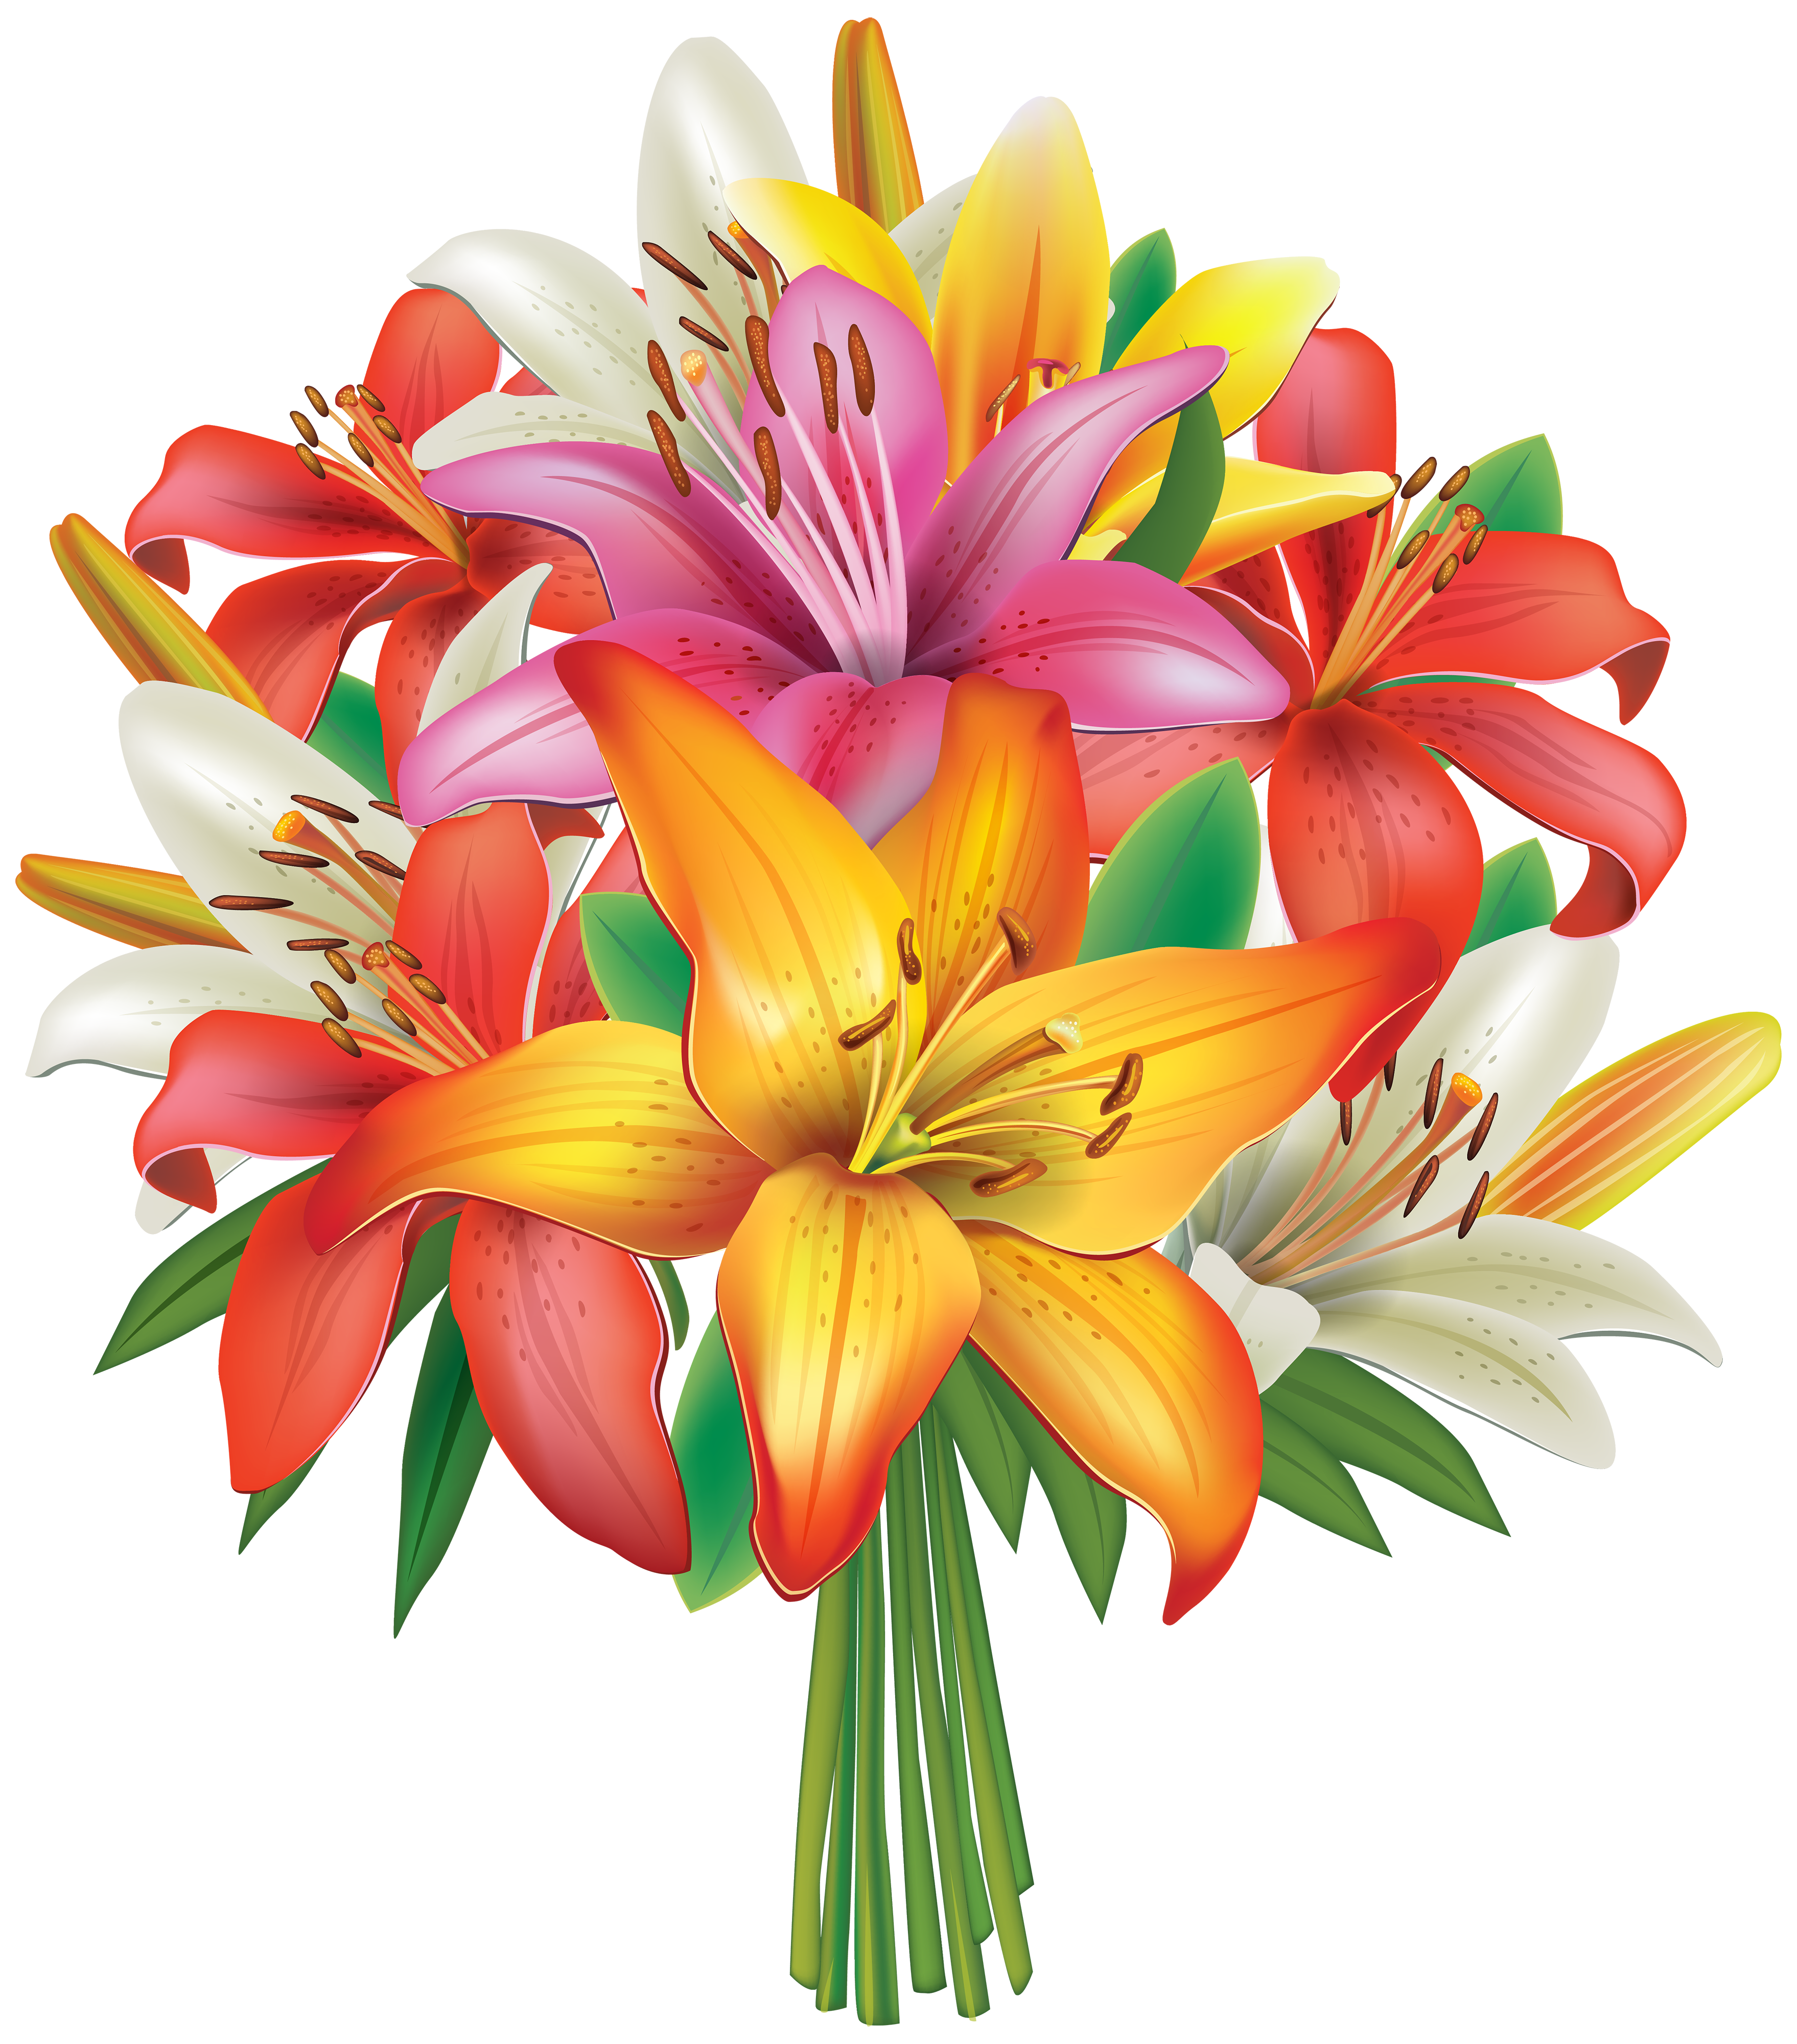 Free Flower Bouquet Transparent Background, Download Free Flower